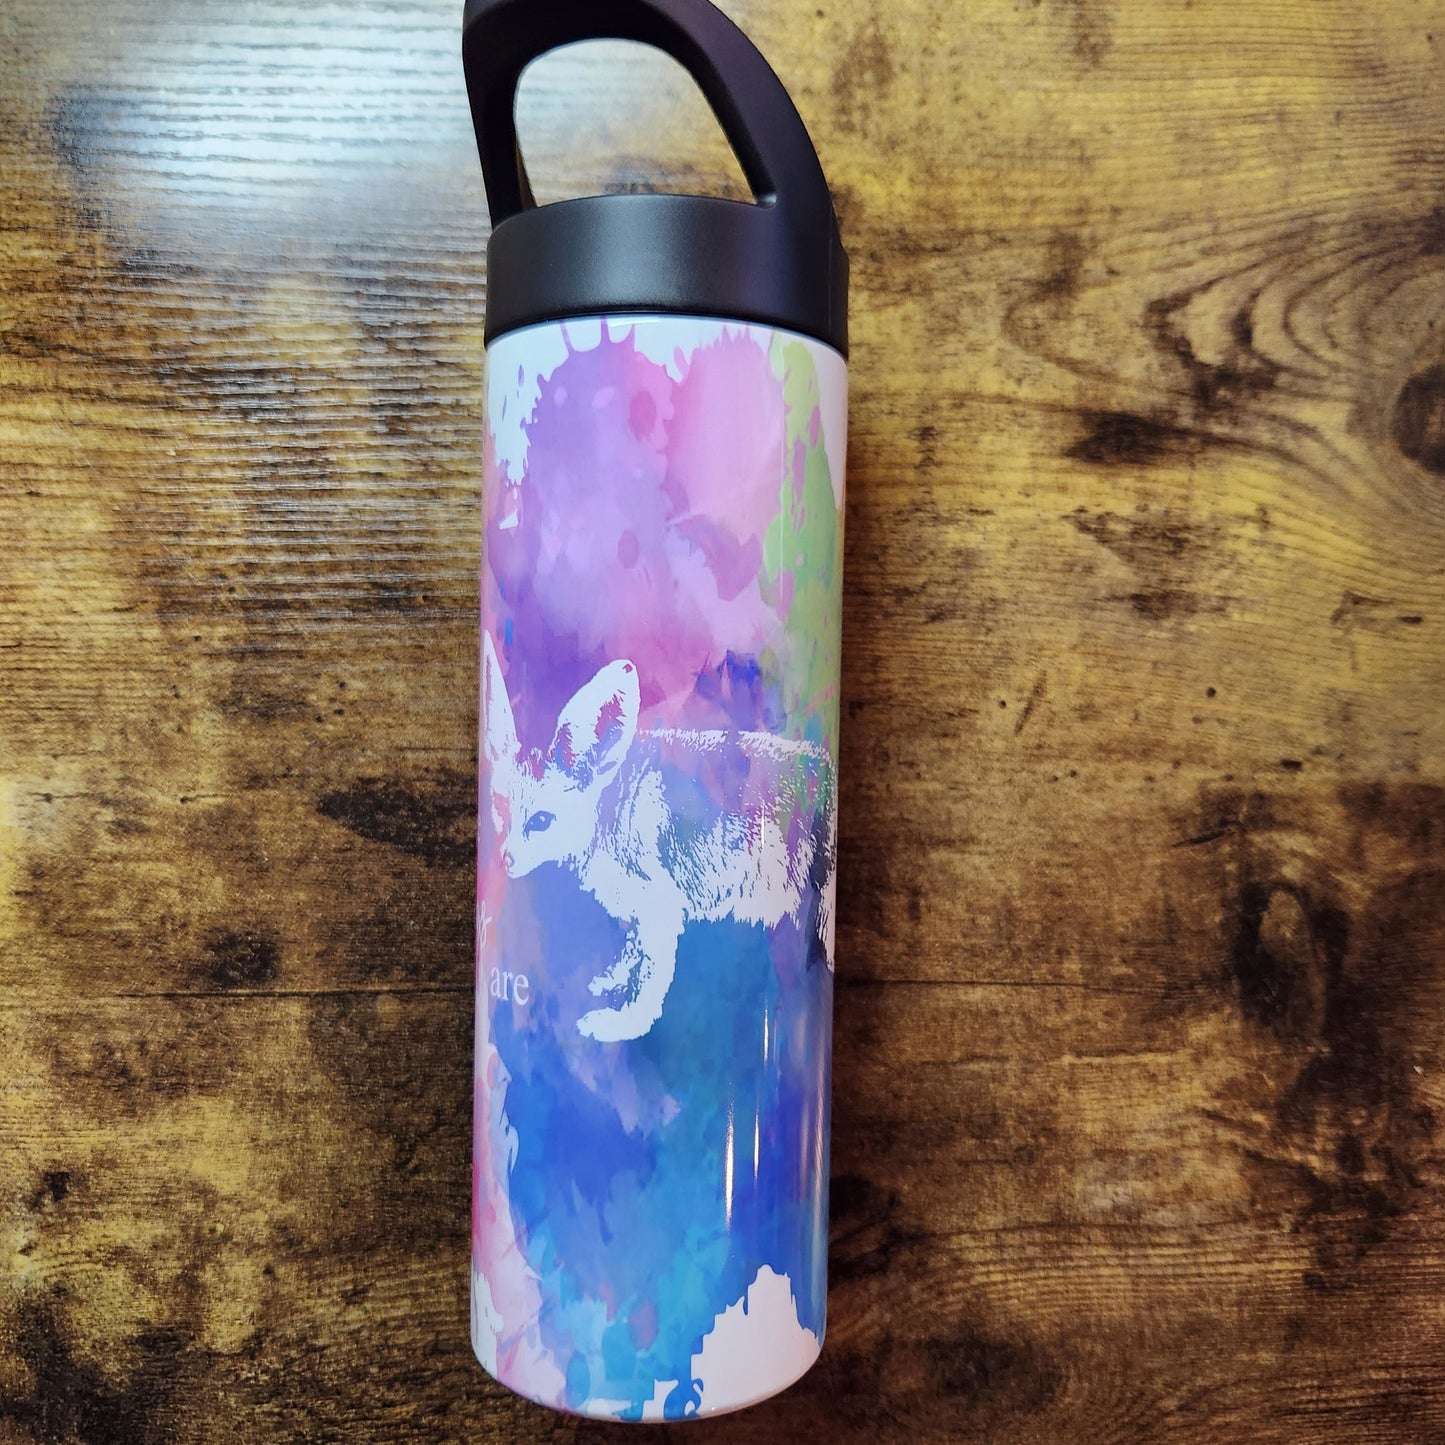 Fennec Fox Find me Wild Thing Quote - Rainbow Splatter Background - Botella de agua de 20 oz (hecha a pedido)